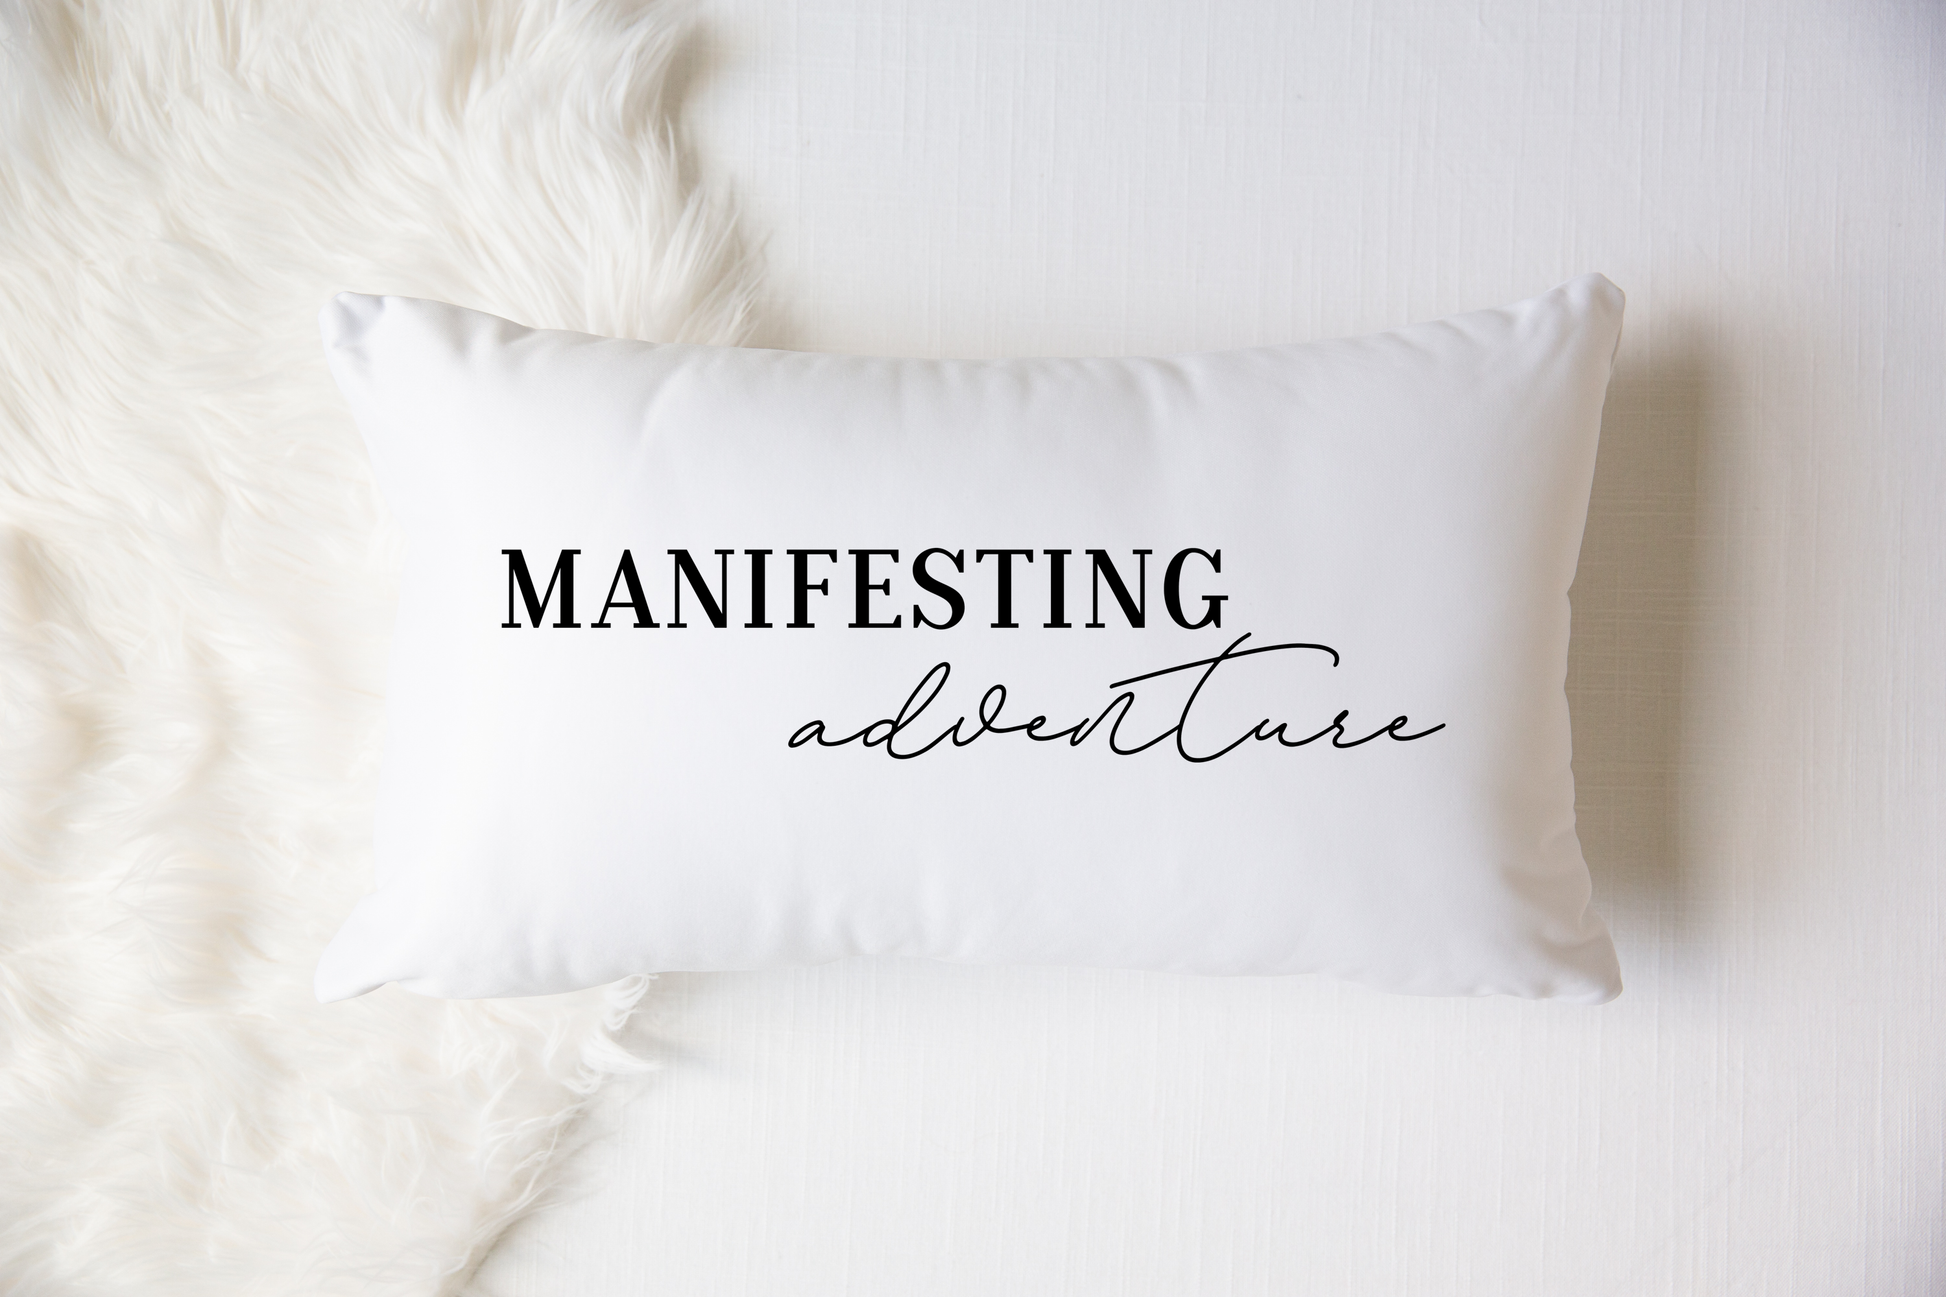 Manifesting Adventure Throw Pillow